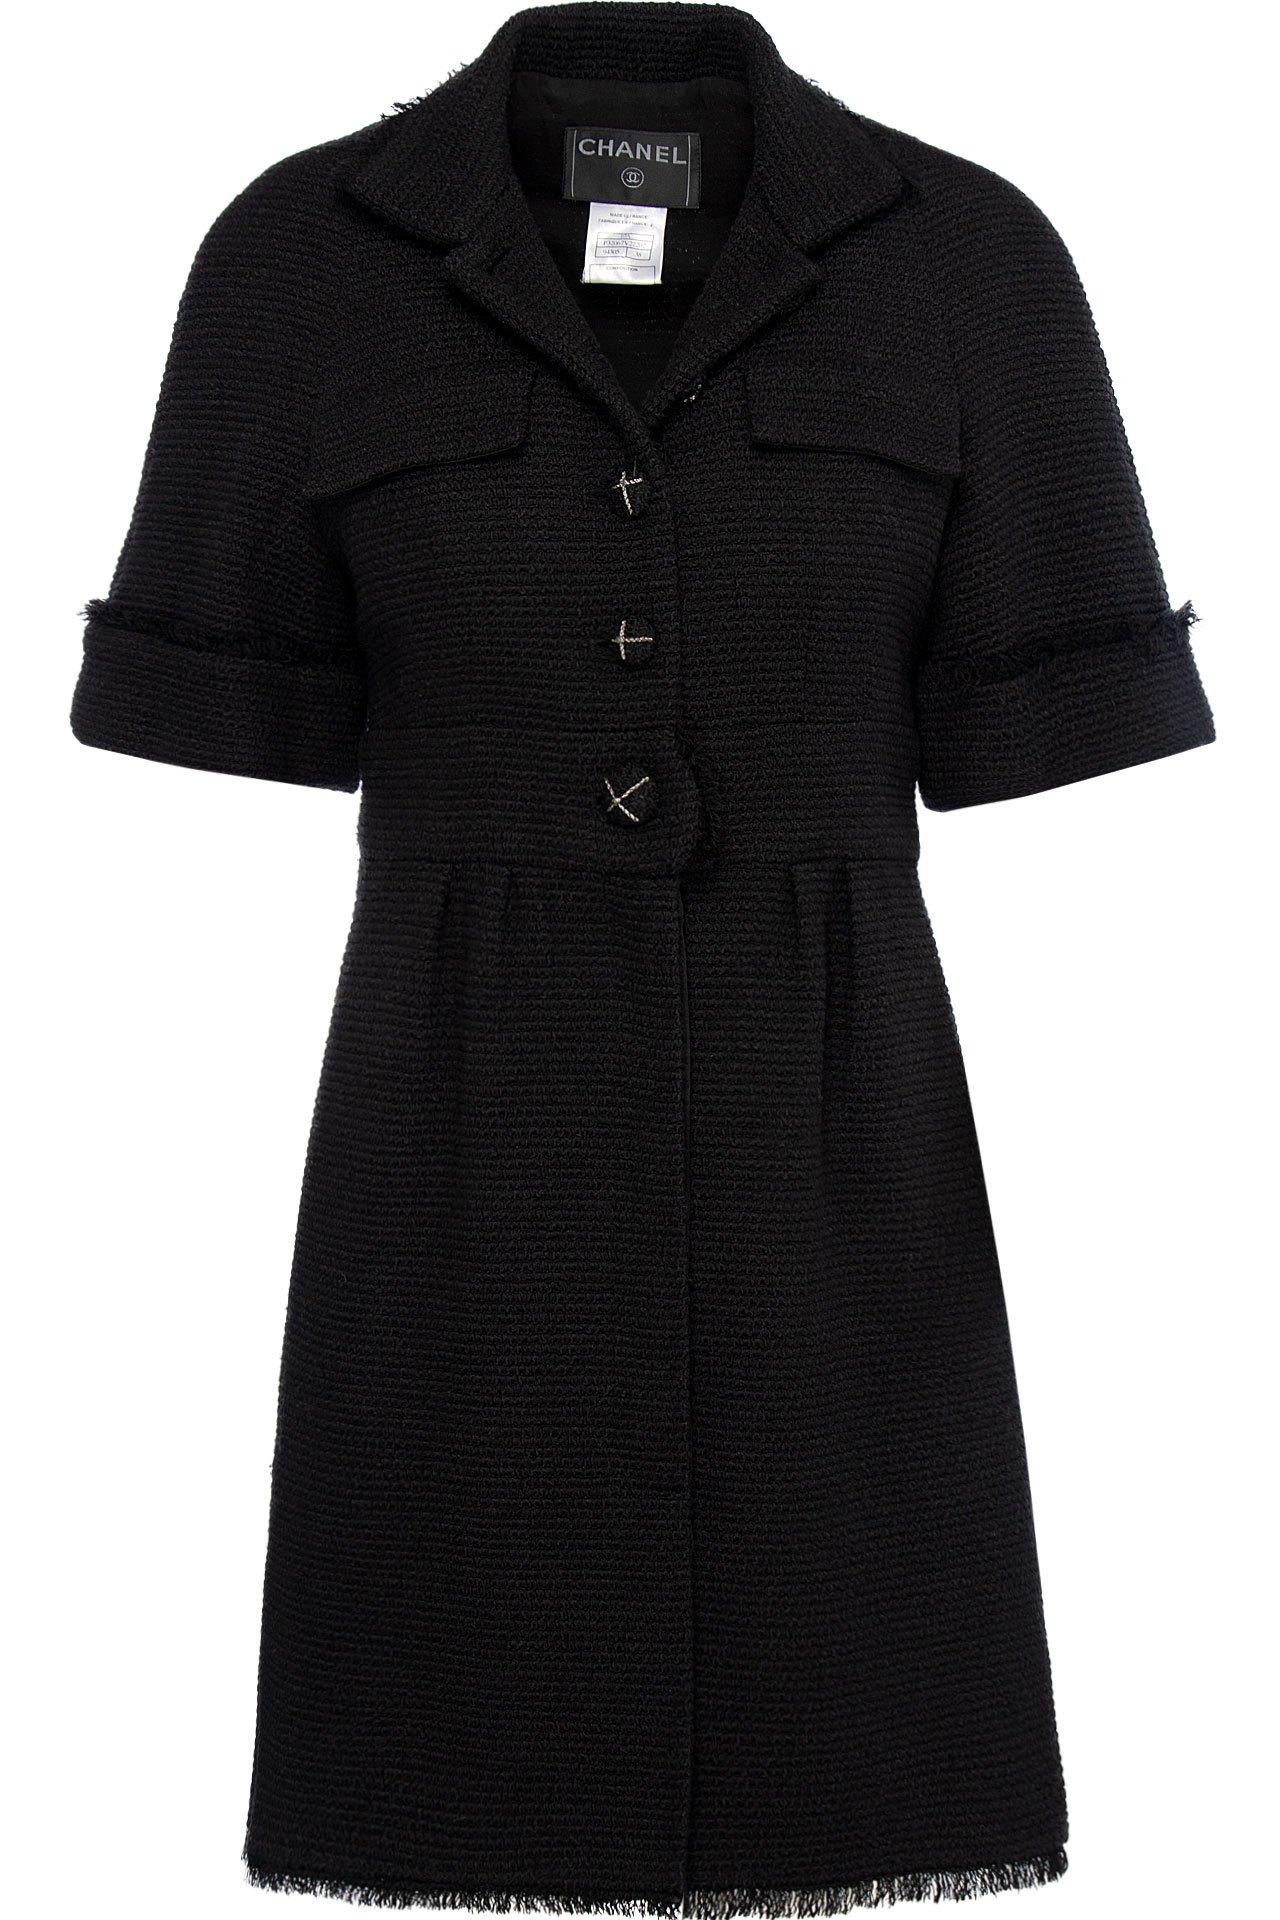 Chanel Paris / Monaco CC Buttons Black Silk Tweed Jacket In Excellent Condition For Sale In Dubai, AE